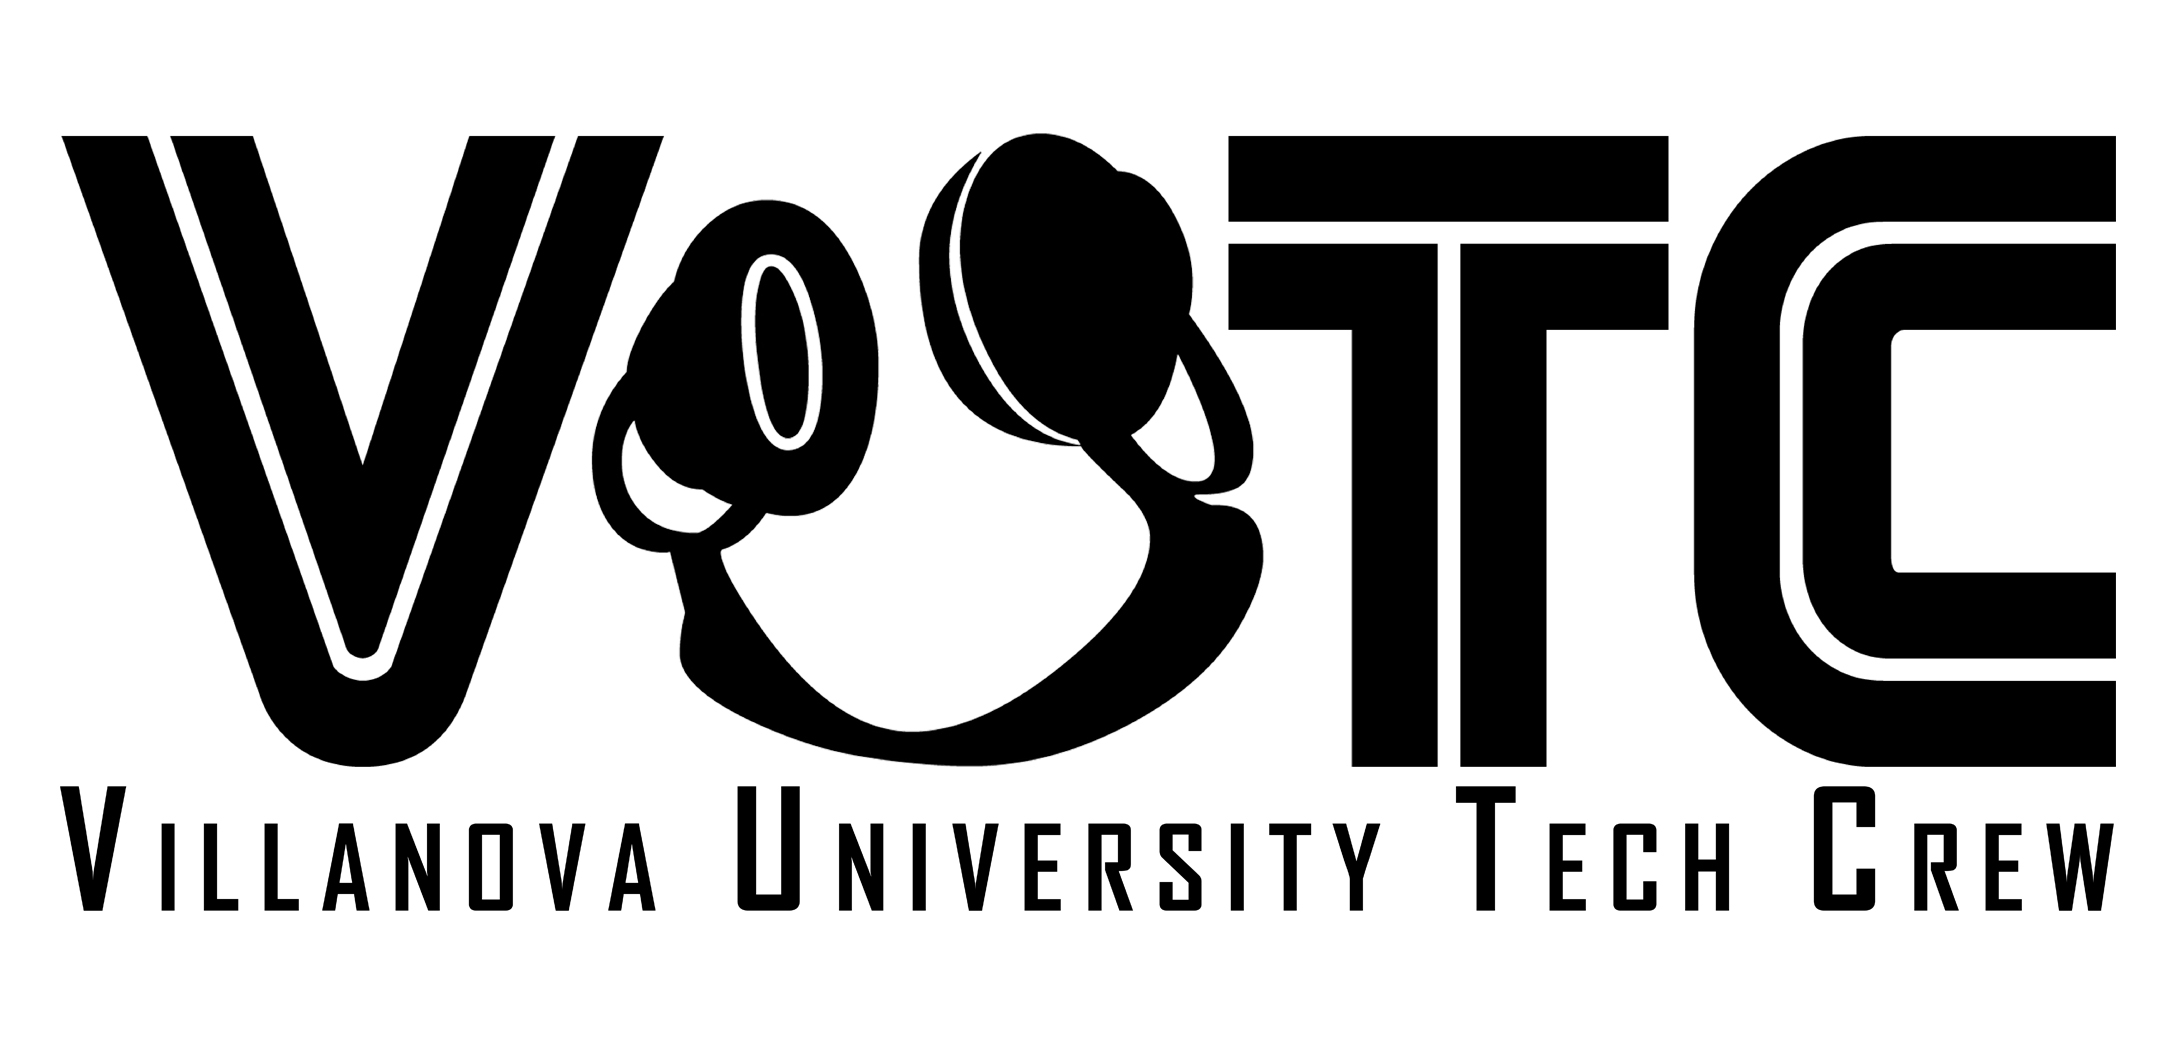 VUTC: Villanova University Tech Crew